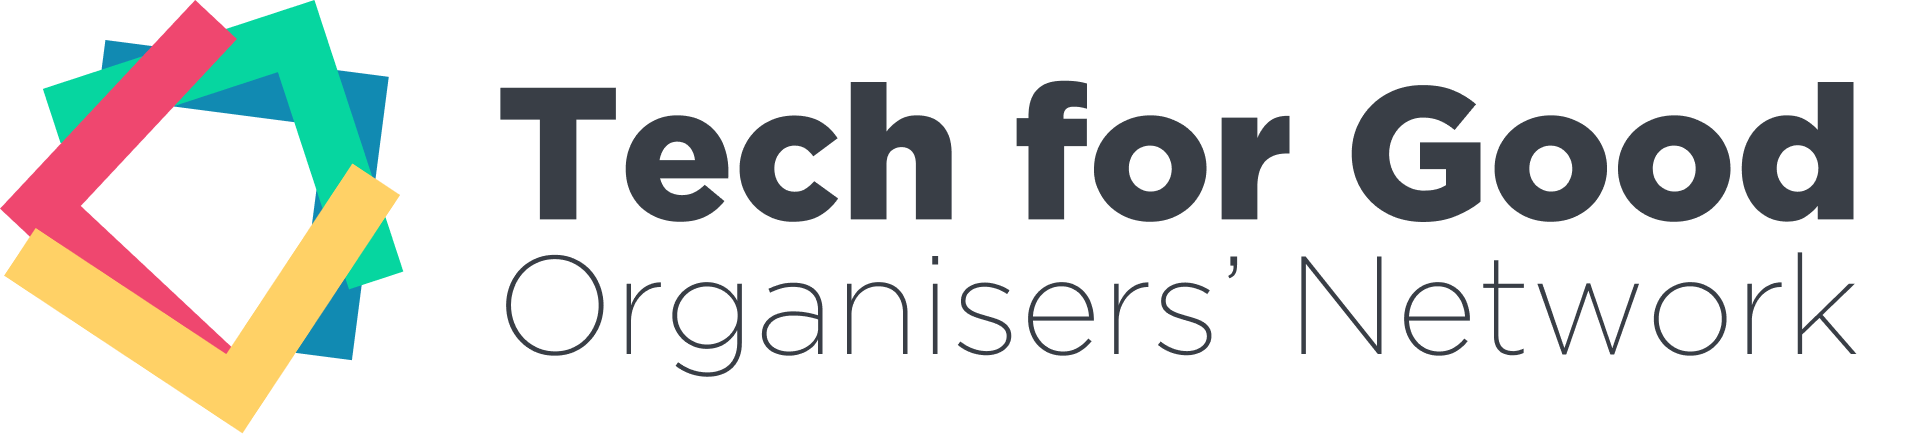 Tech for Good UK Network Organisers